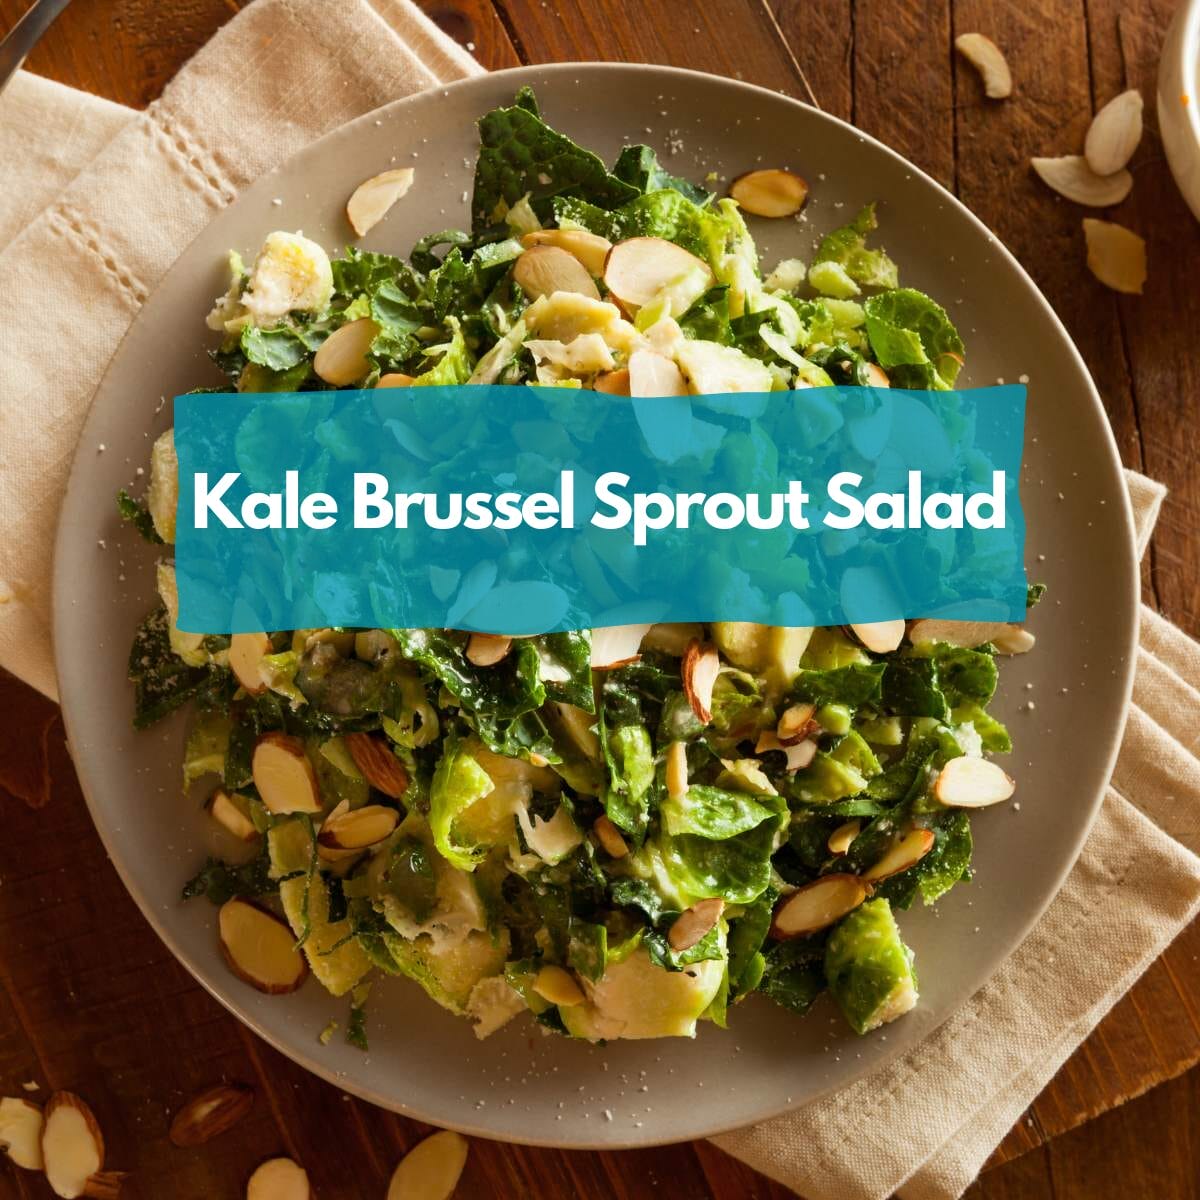 Kale brussel sprout salad